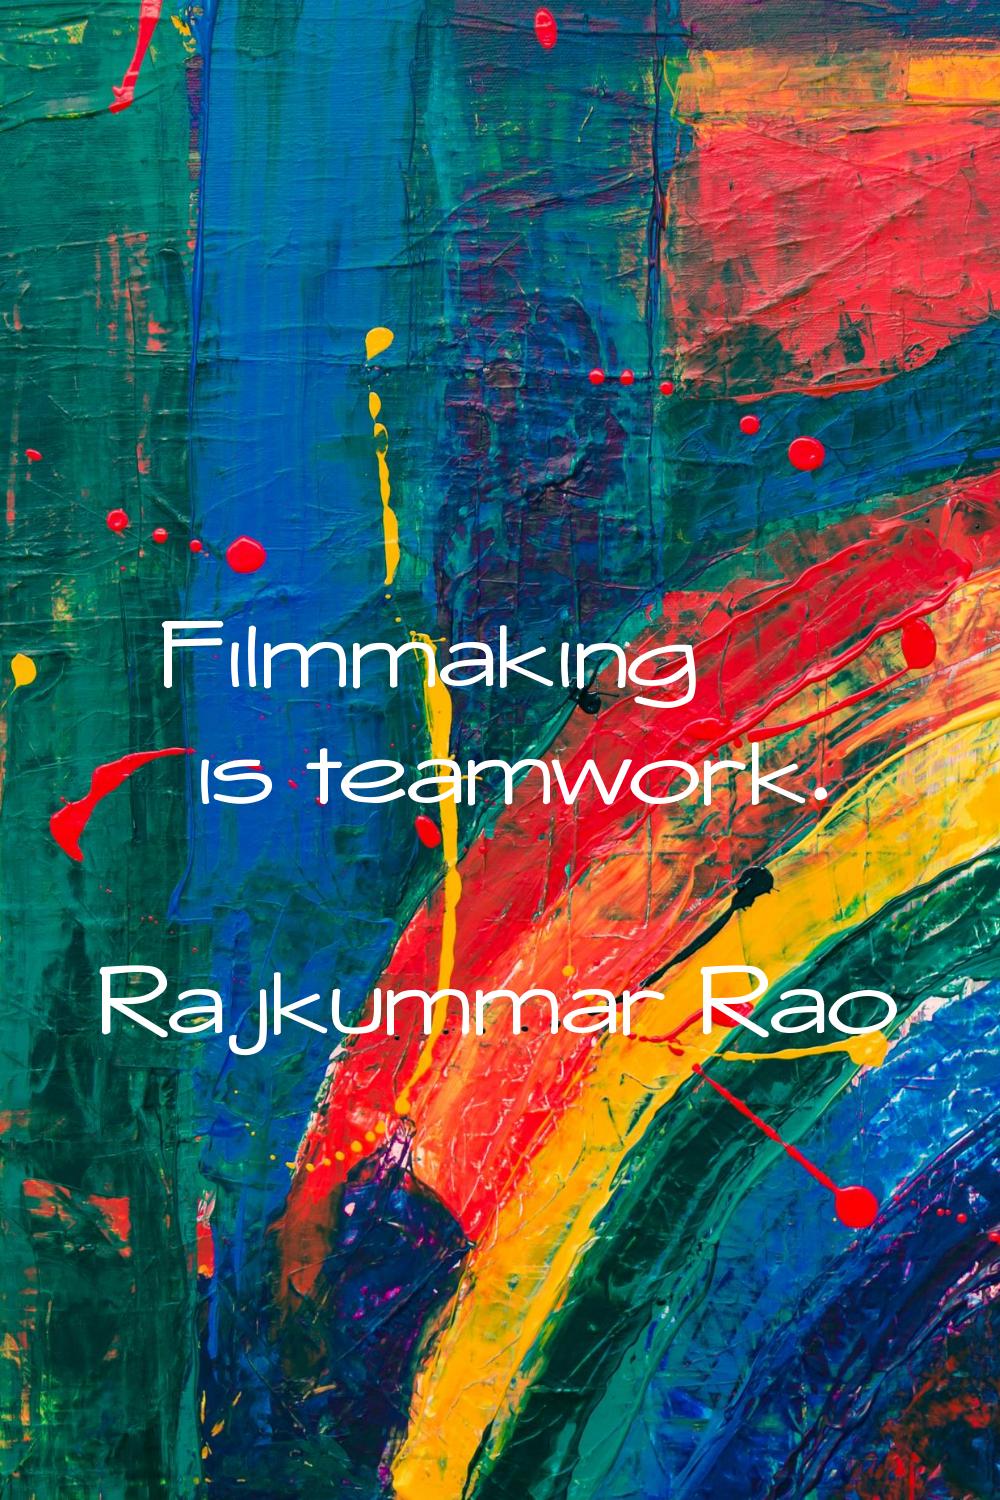 Filmmaking is teamwork.